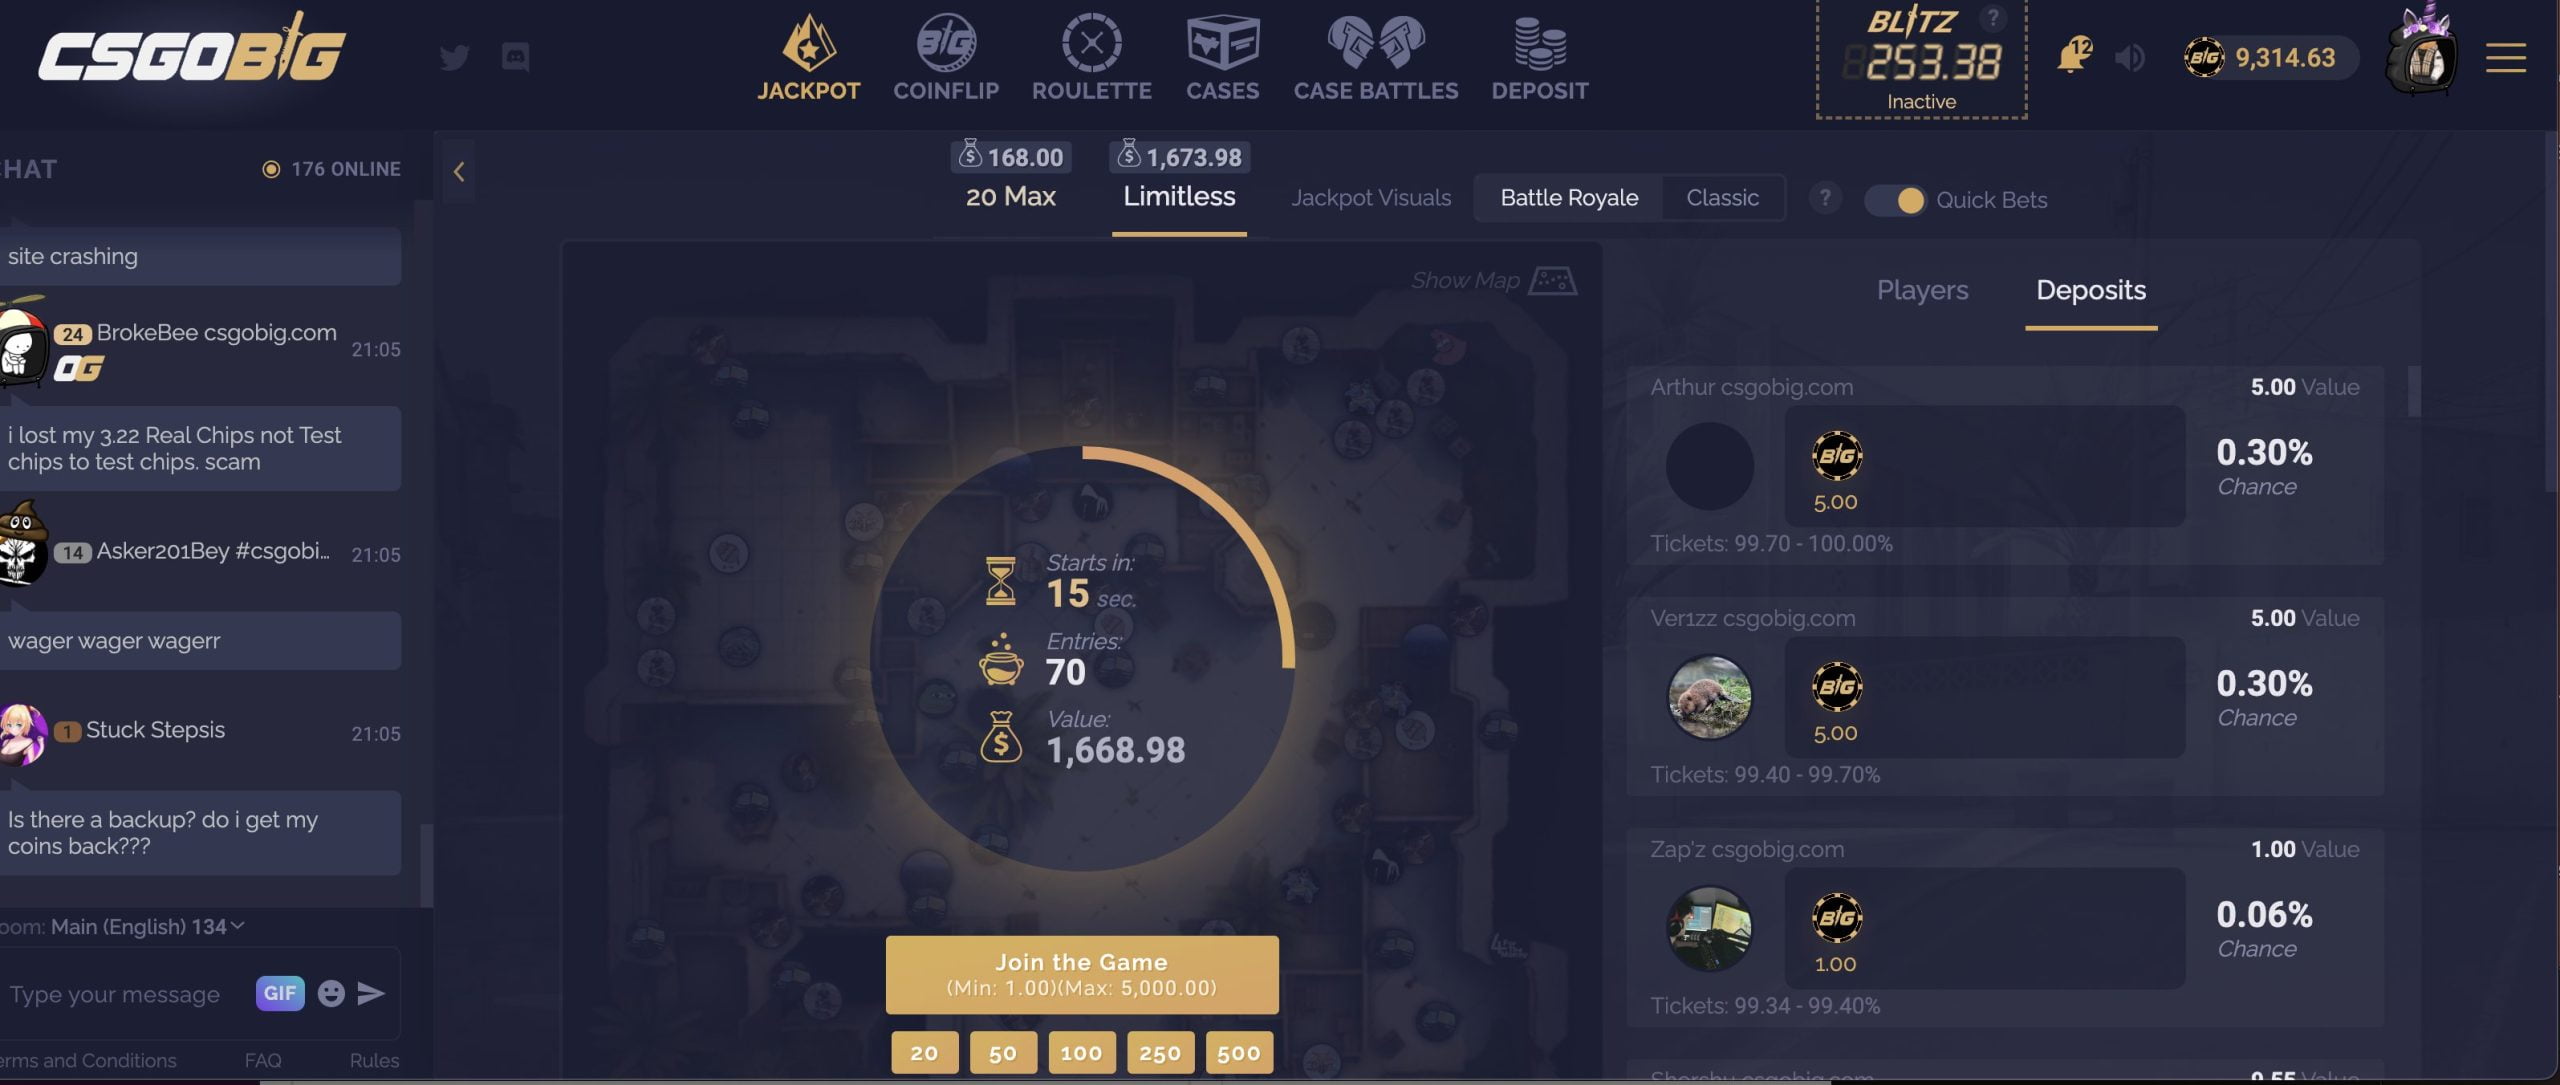 CSGOBig: A Premier CS2 Gambling and Betting Platform